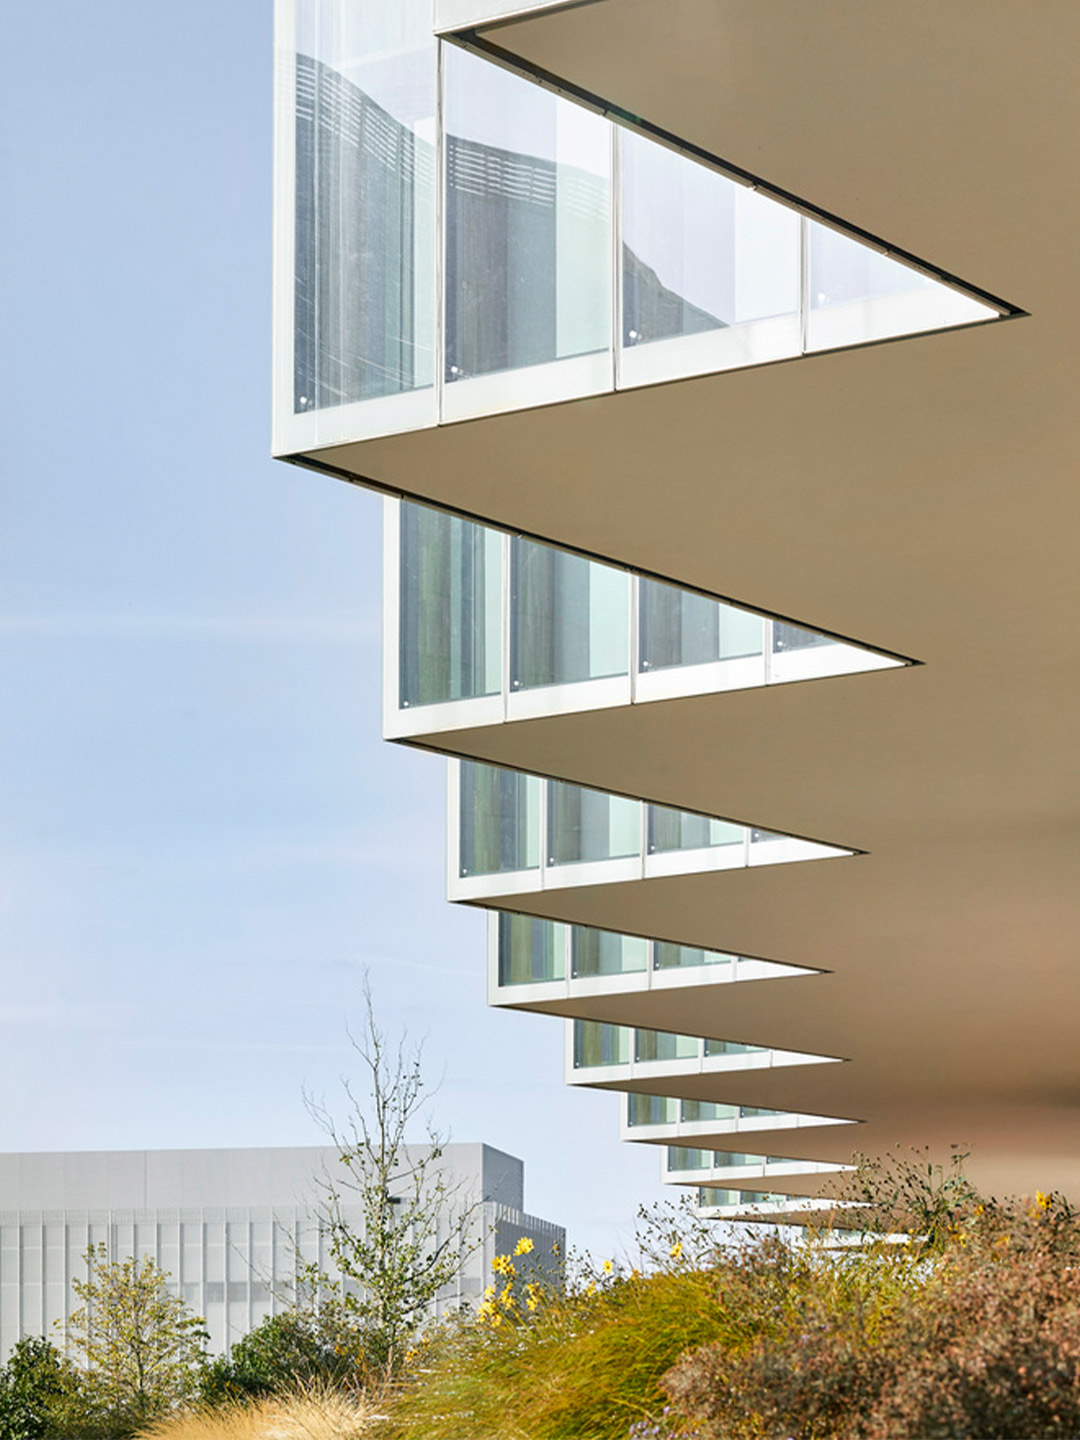 AstraZeneca’s global R&D facility in Cambridge by Herzog & de Meuron